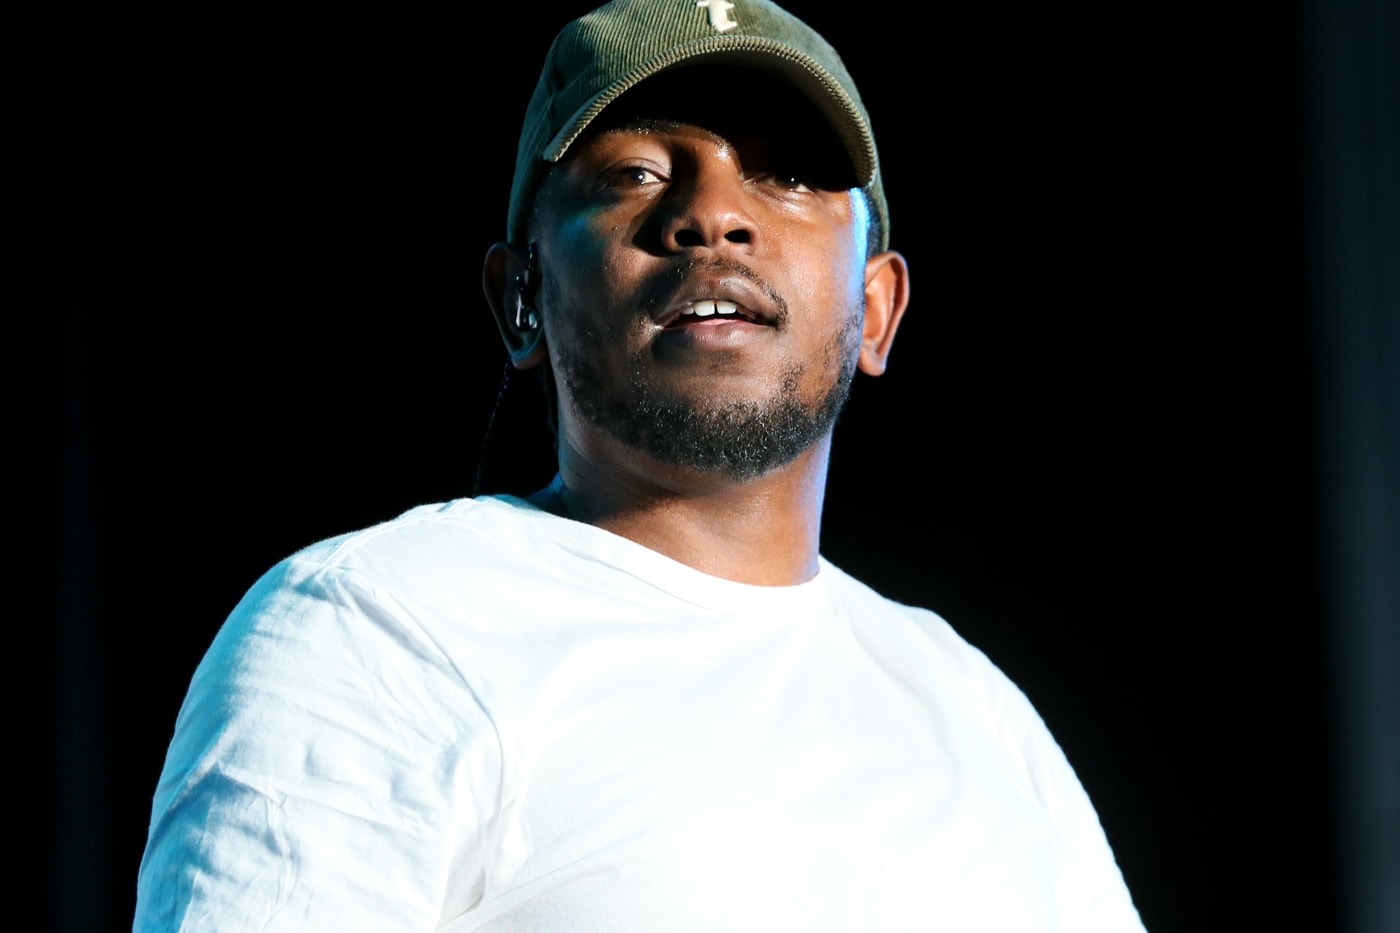 Kendrick Lamar Louis Farrakhan Meeting 2017